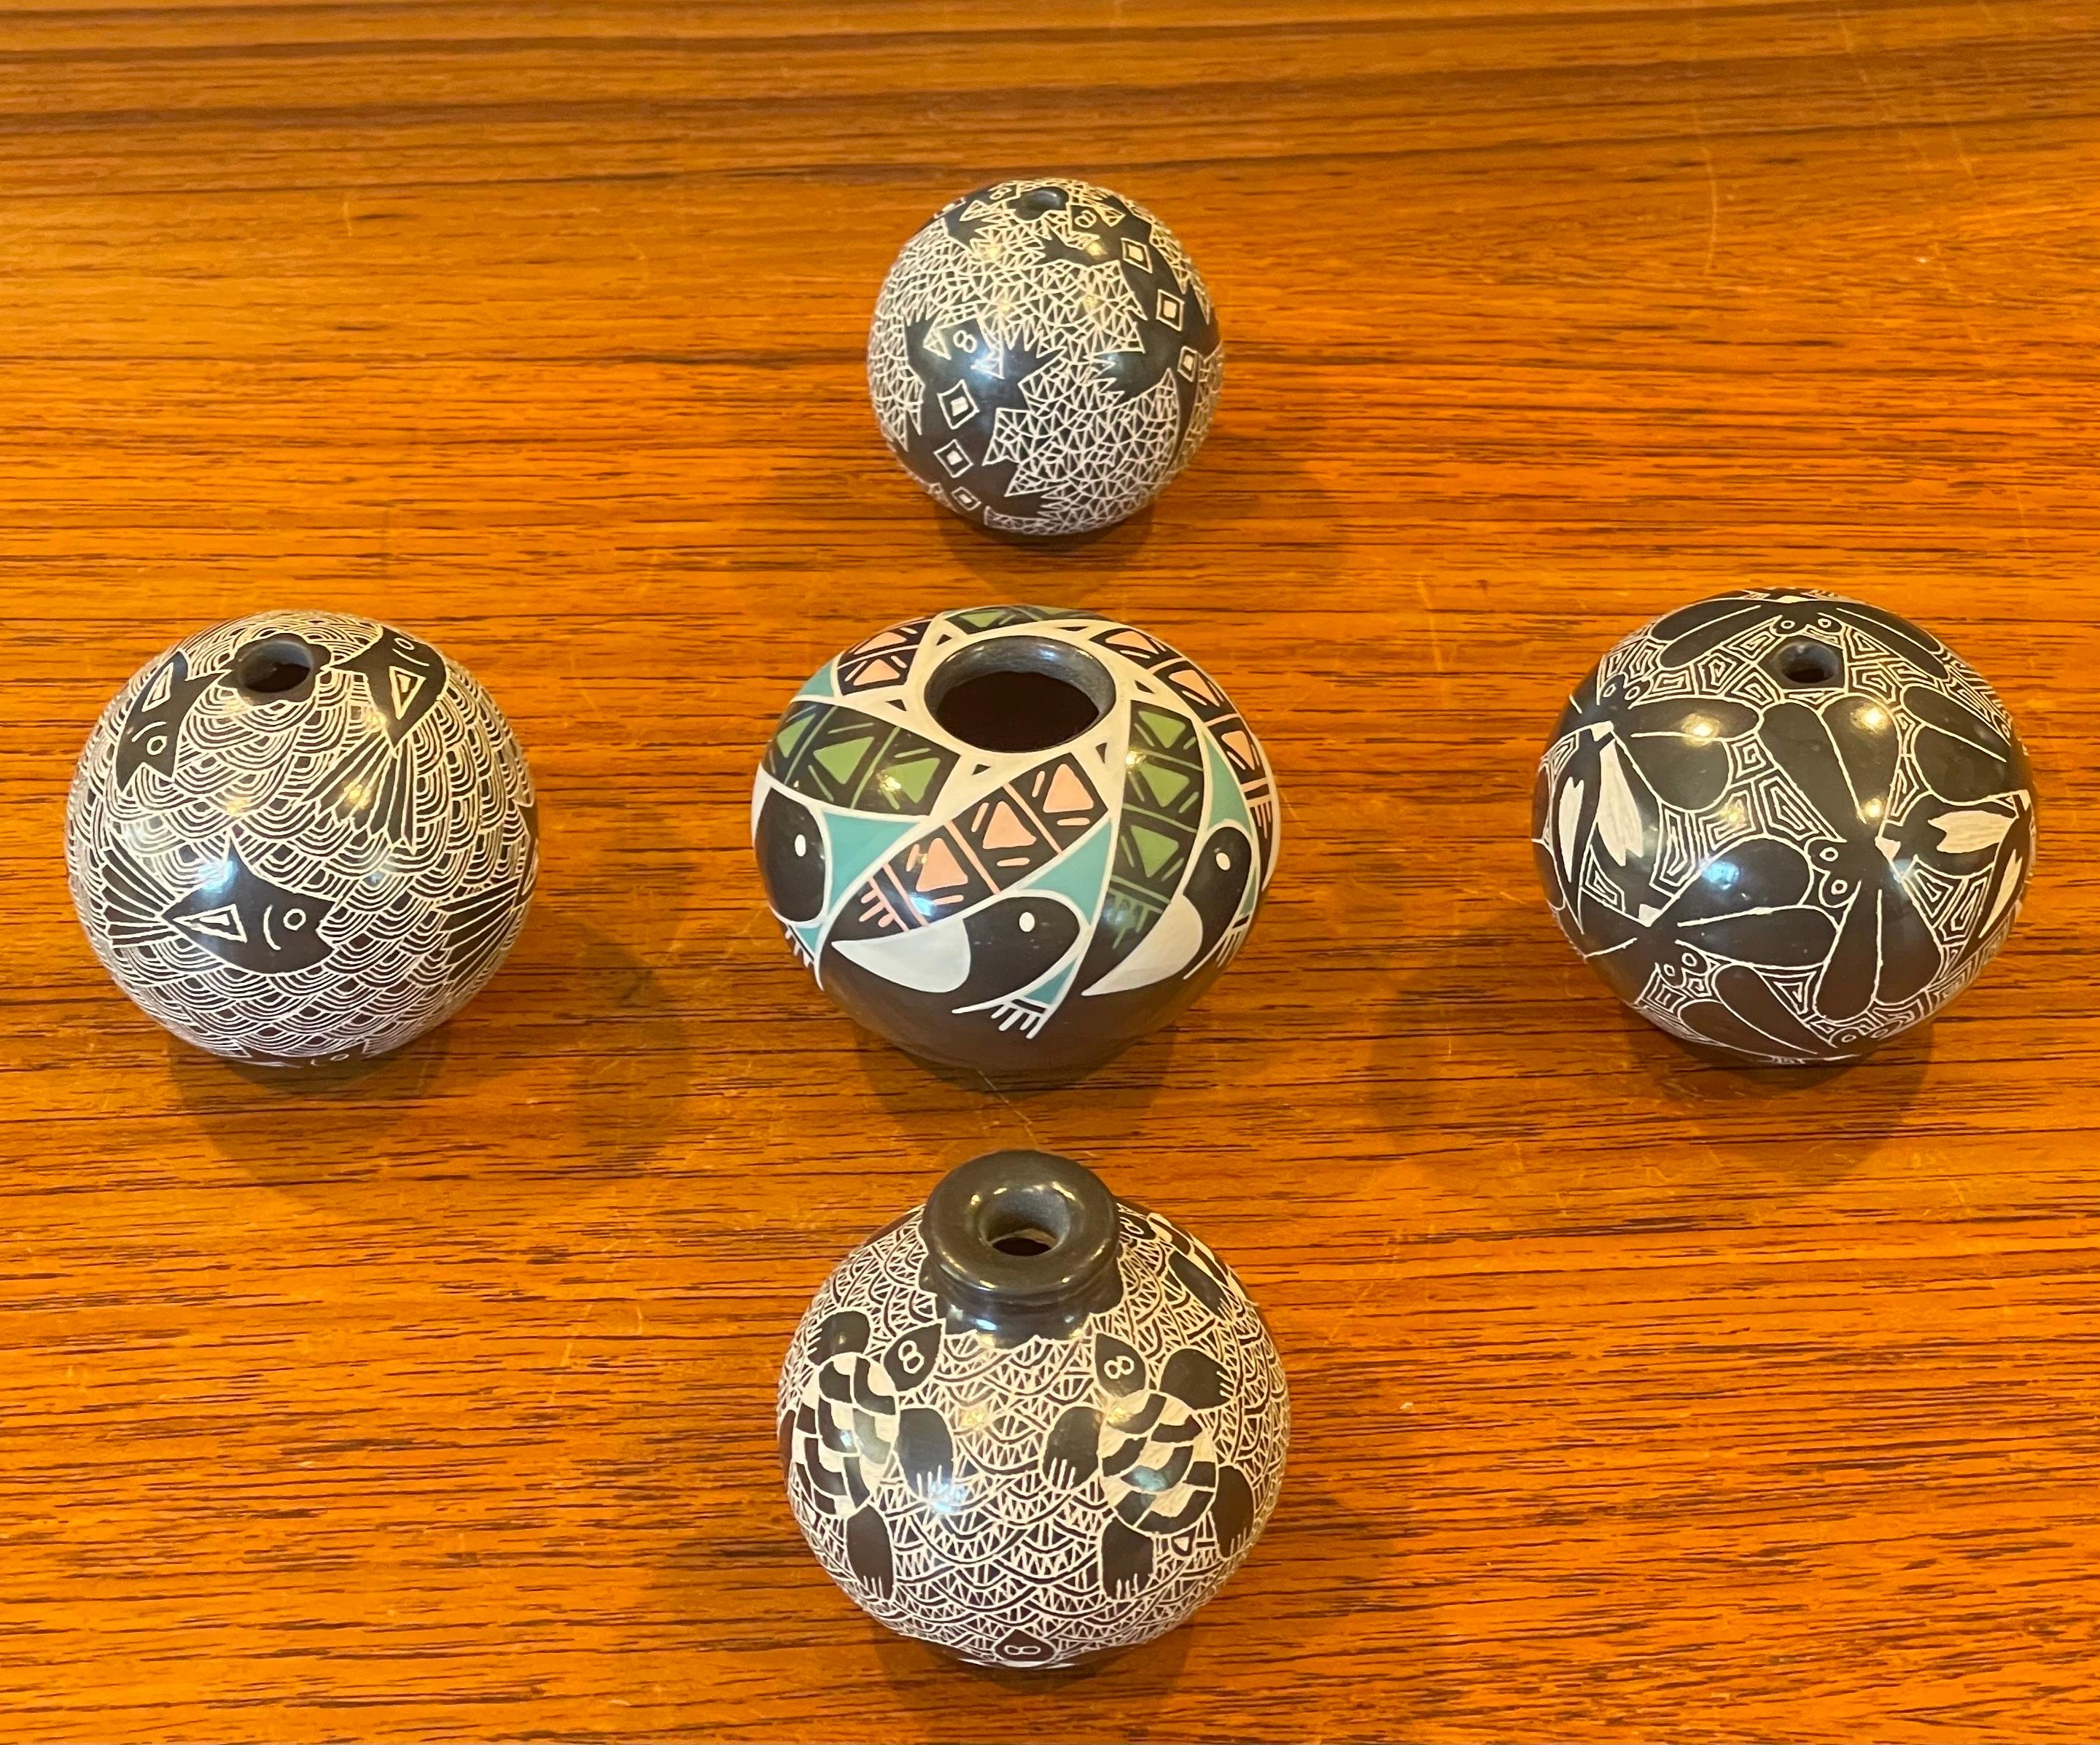 Amérindien The Collective of Five Miniature Mata Ortiz Pottery Ollas / Seed Pots (collection de cinq pots de semences miniatures en poterie Mata Ortiz) en vente